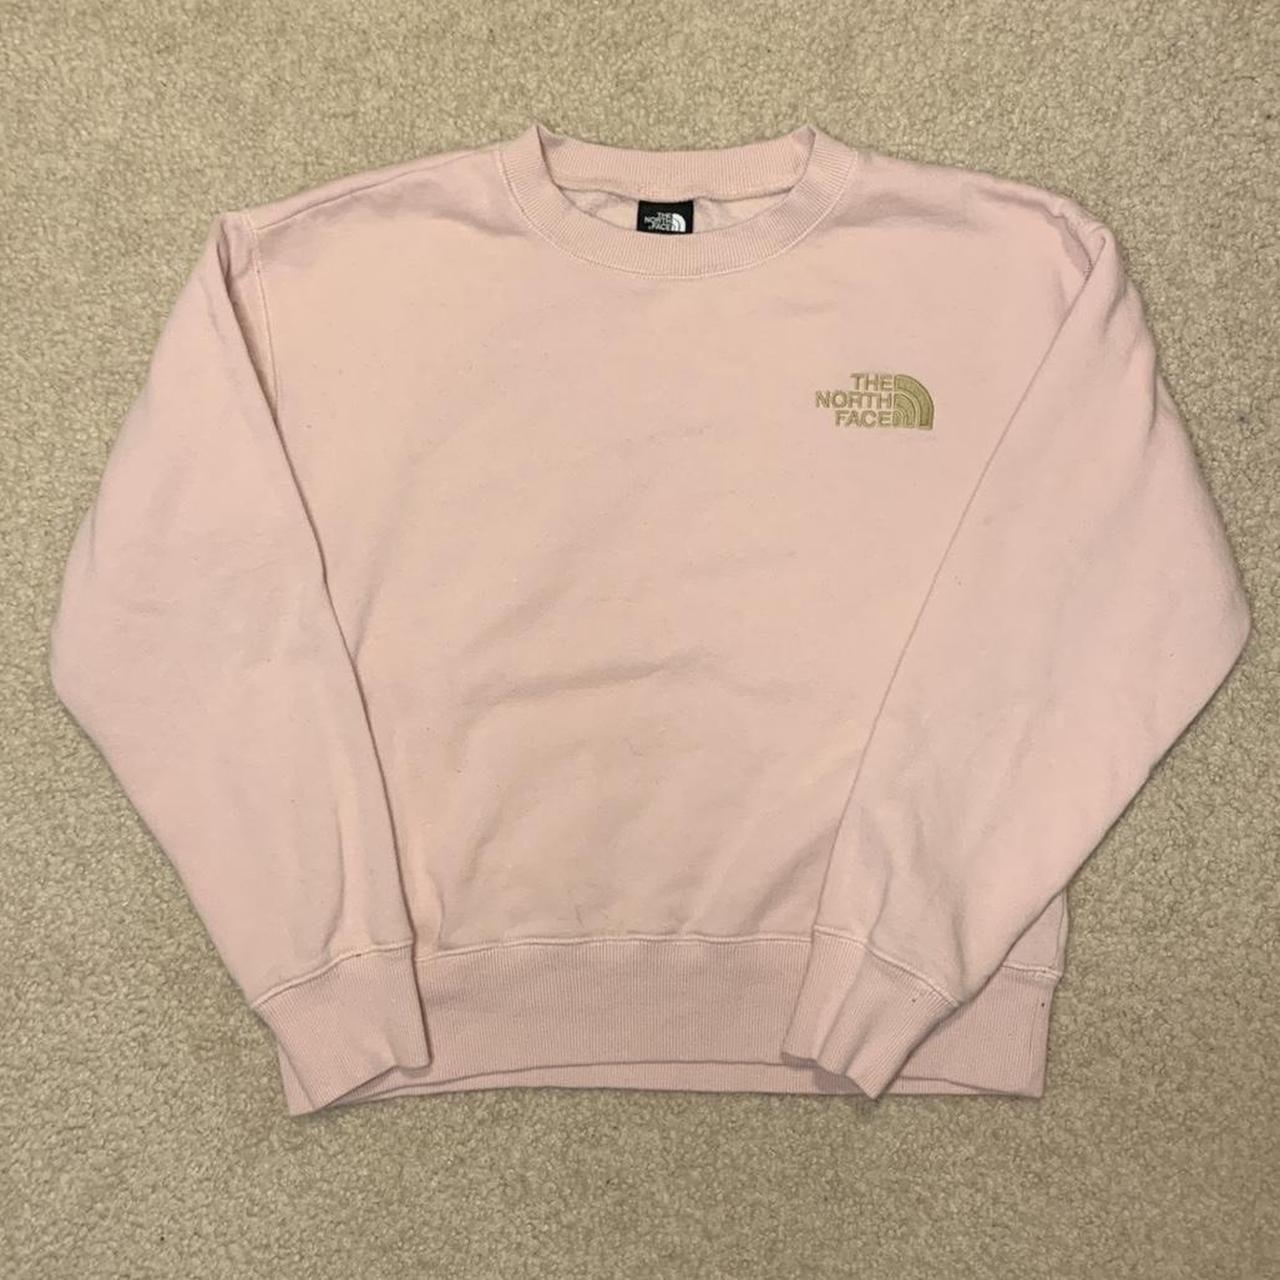 The North Face Women's Pink Sweatshirt